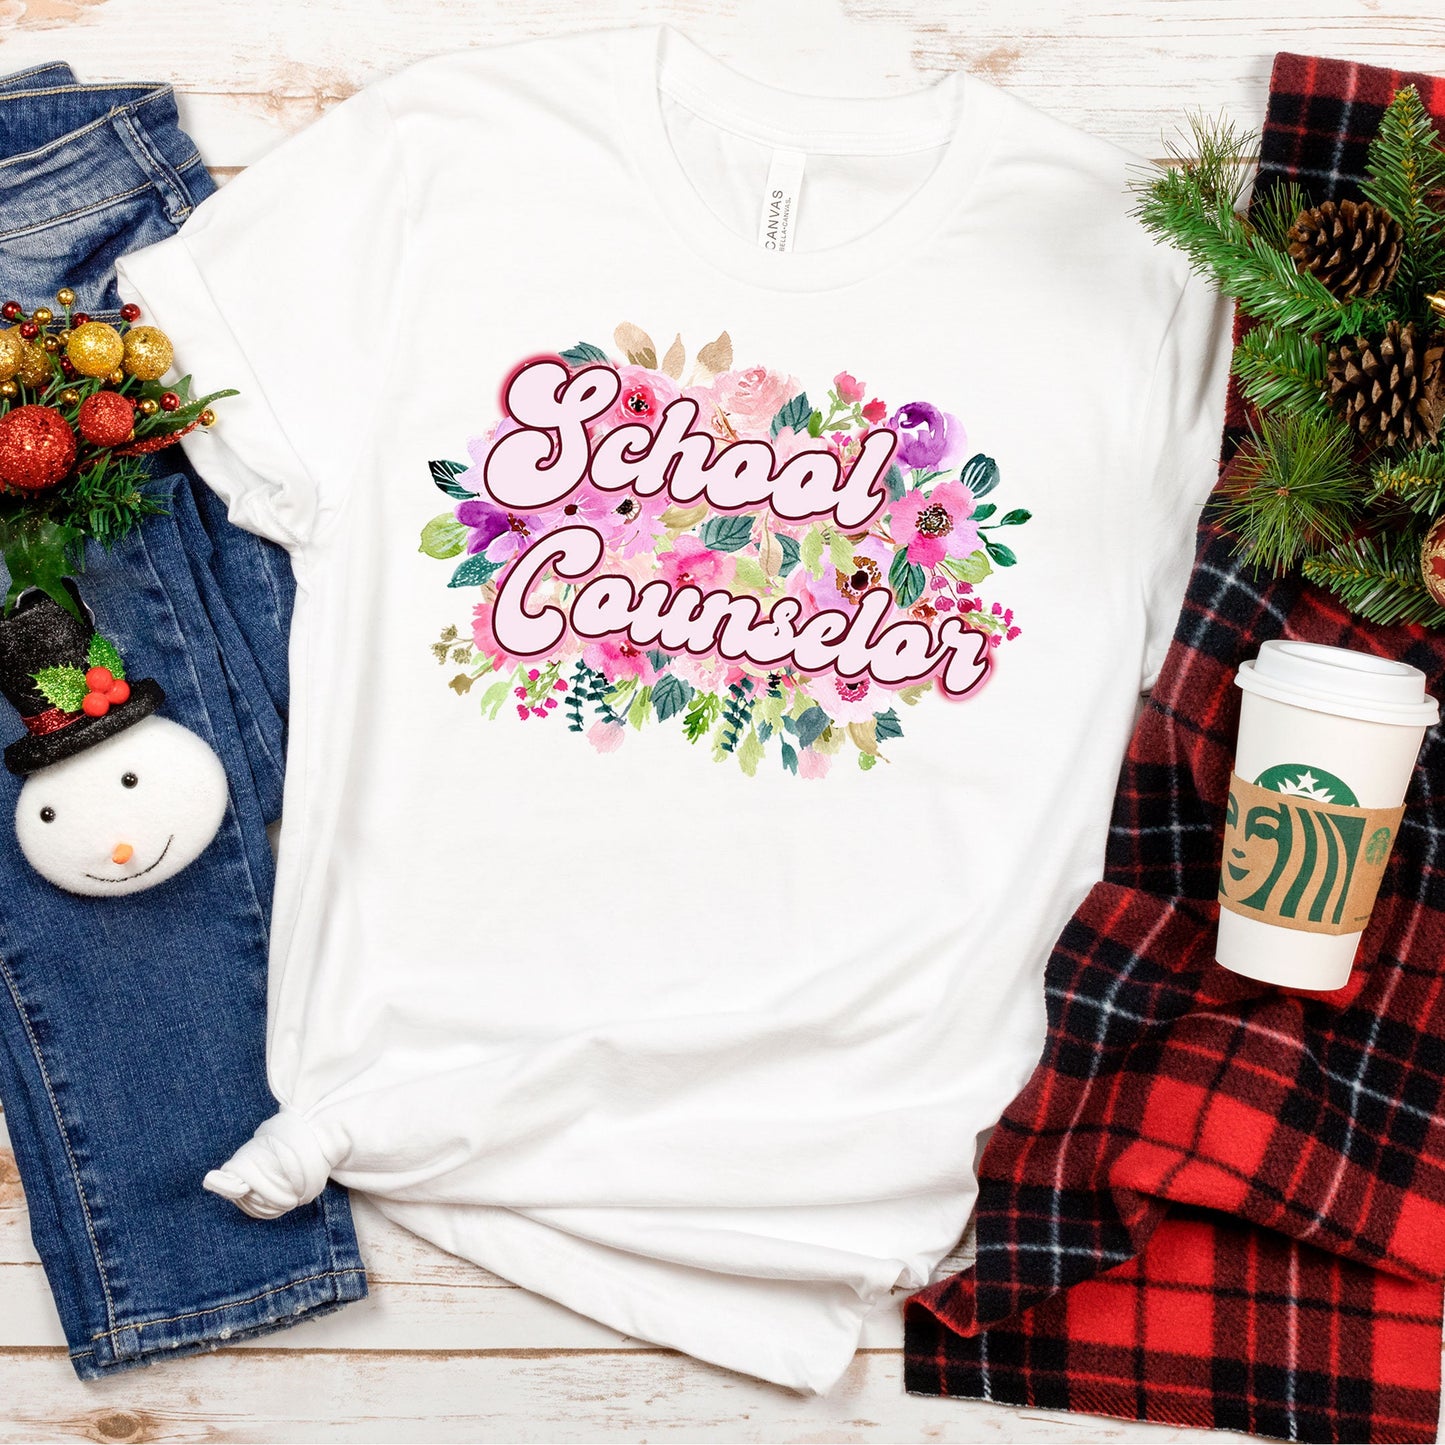 School Counselor Shirt, Counselor Sweatshirt, Counselor Flower Floral, Counseling Office, School Counselor Sweater Gift, Counselor Lady Tee